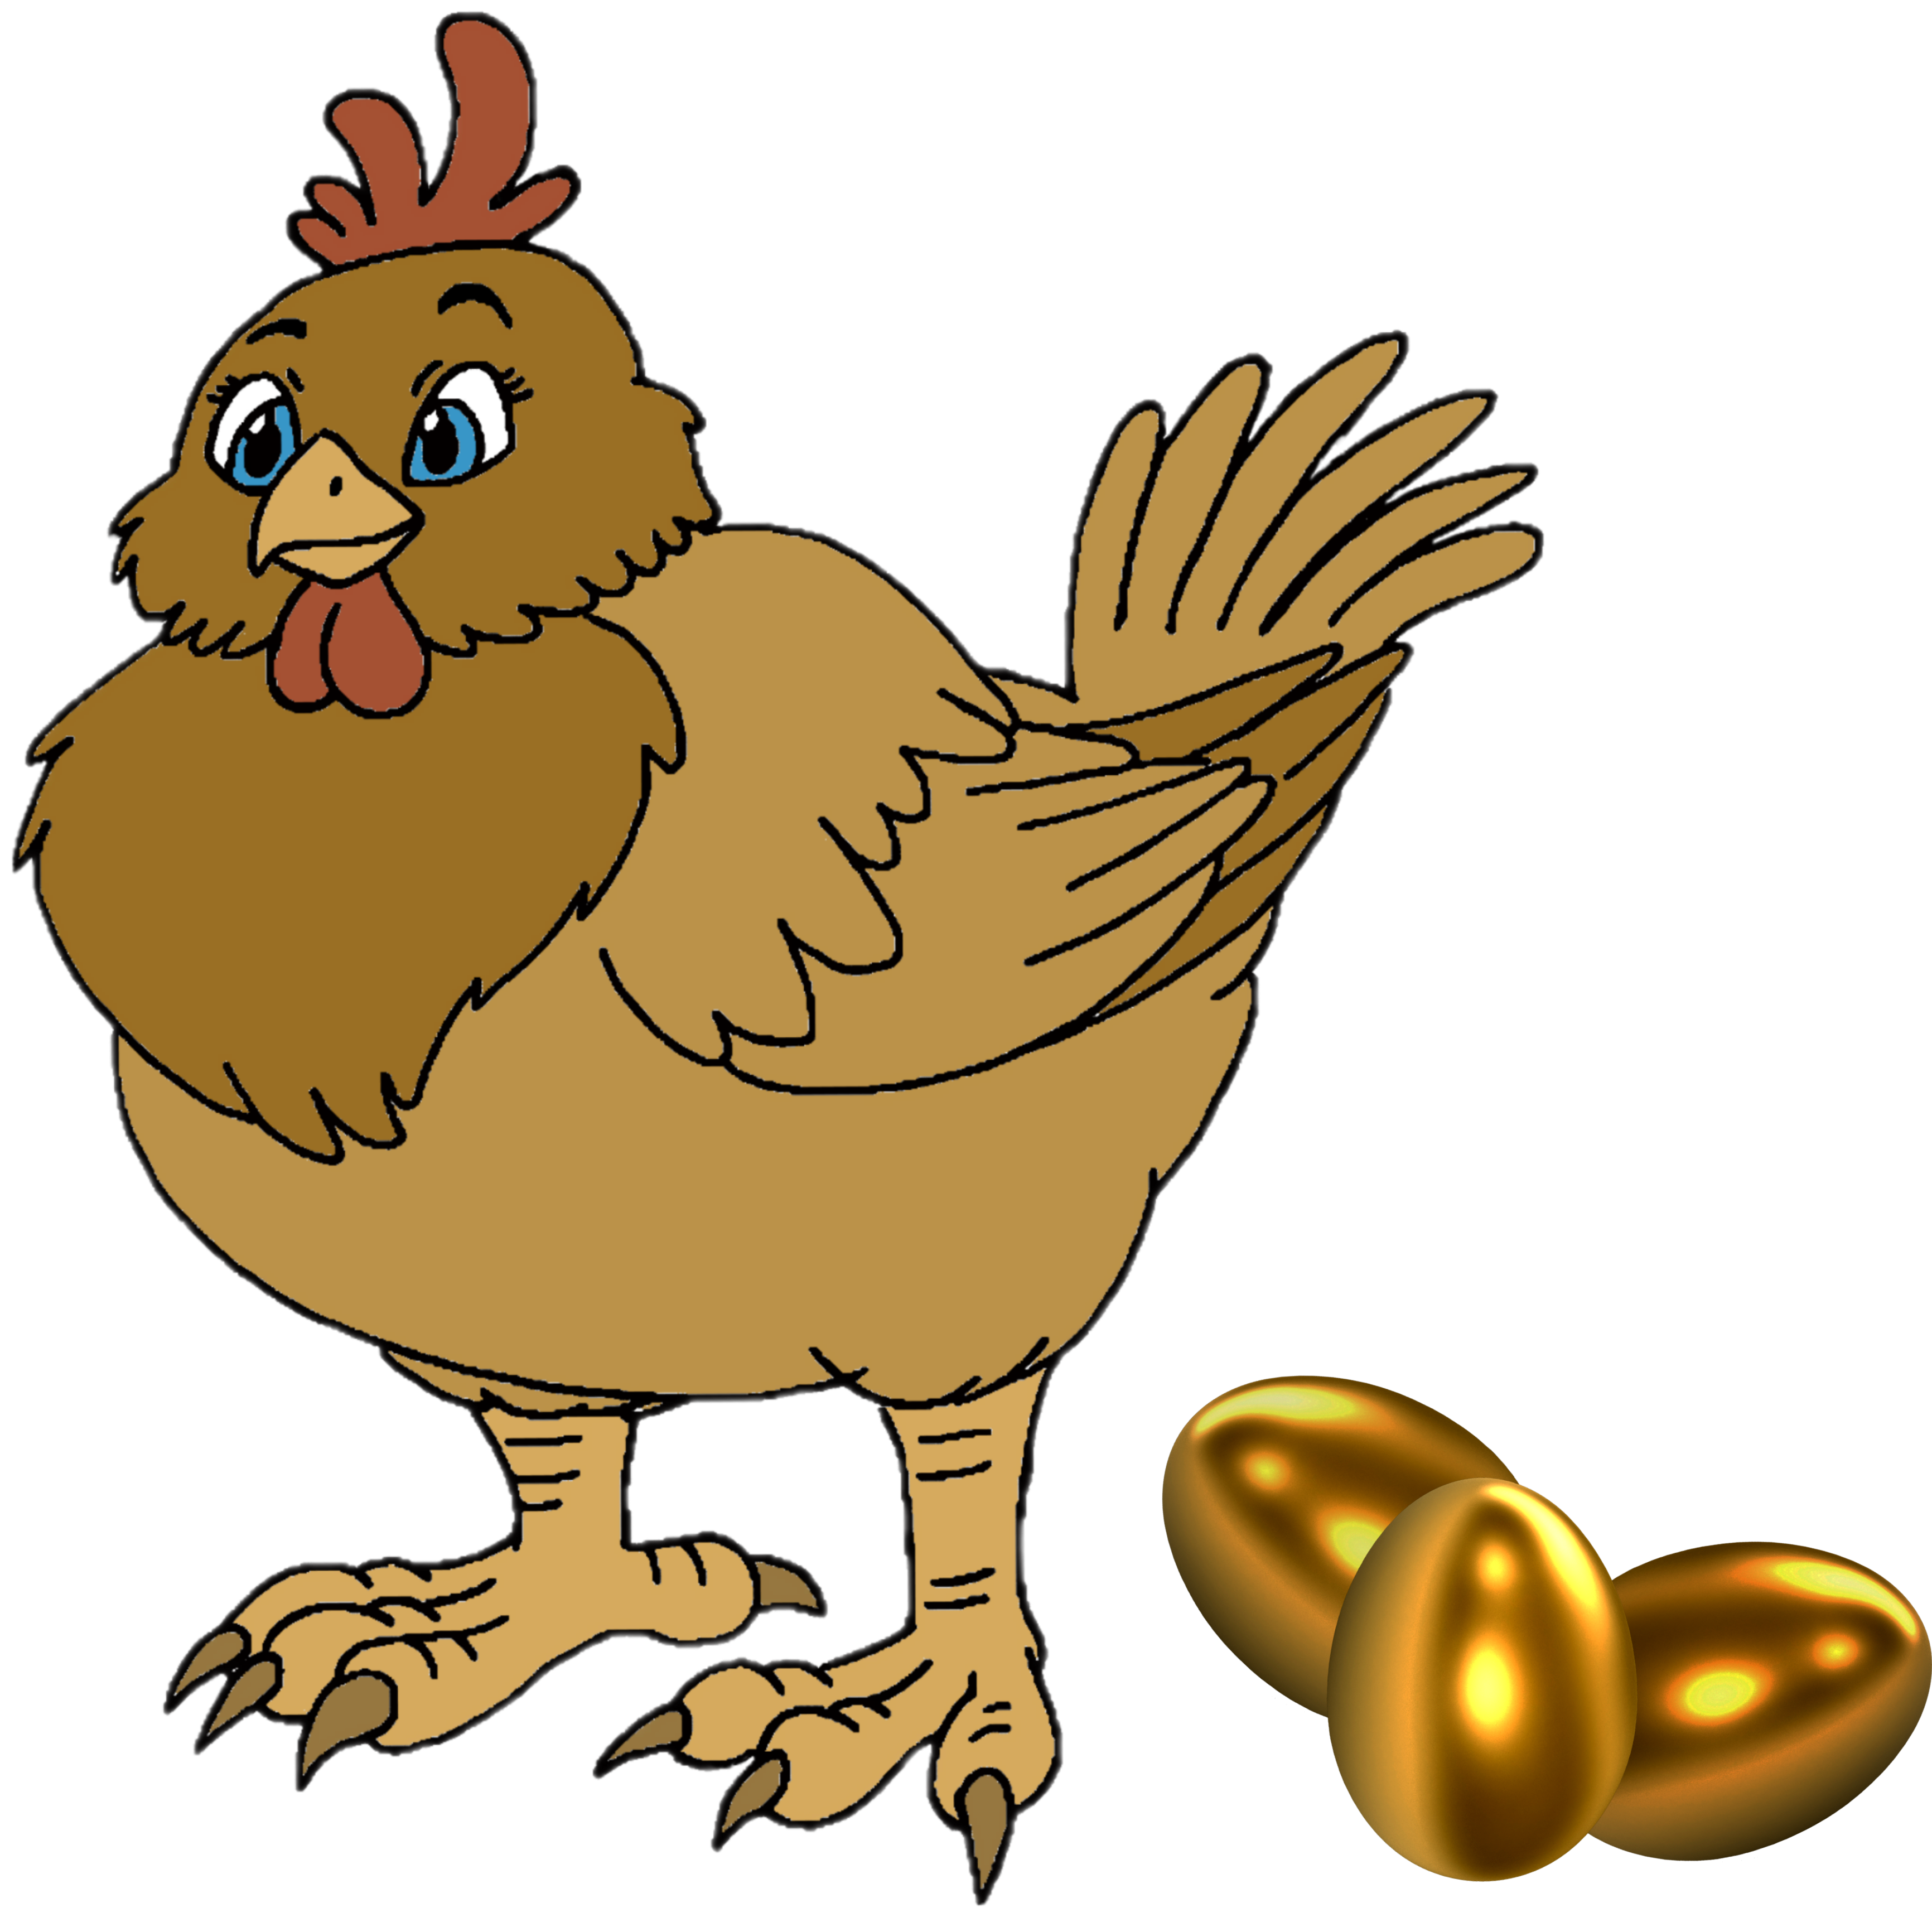 The Golden Hen (with Golden Eggs) by KHWarrior on DeviantArt